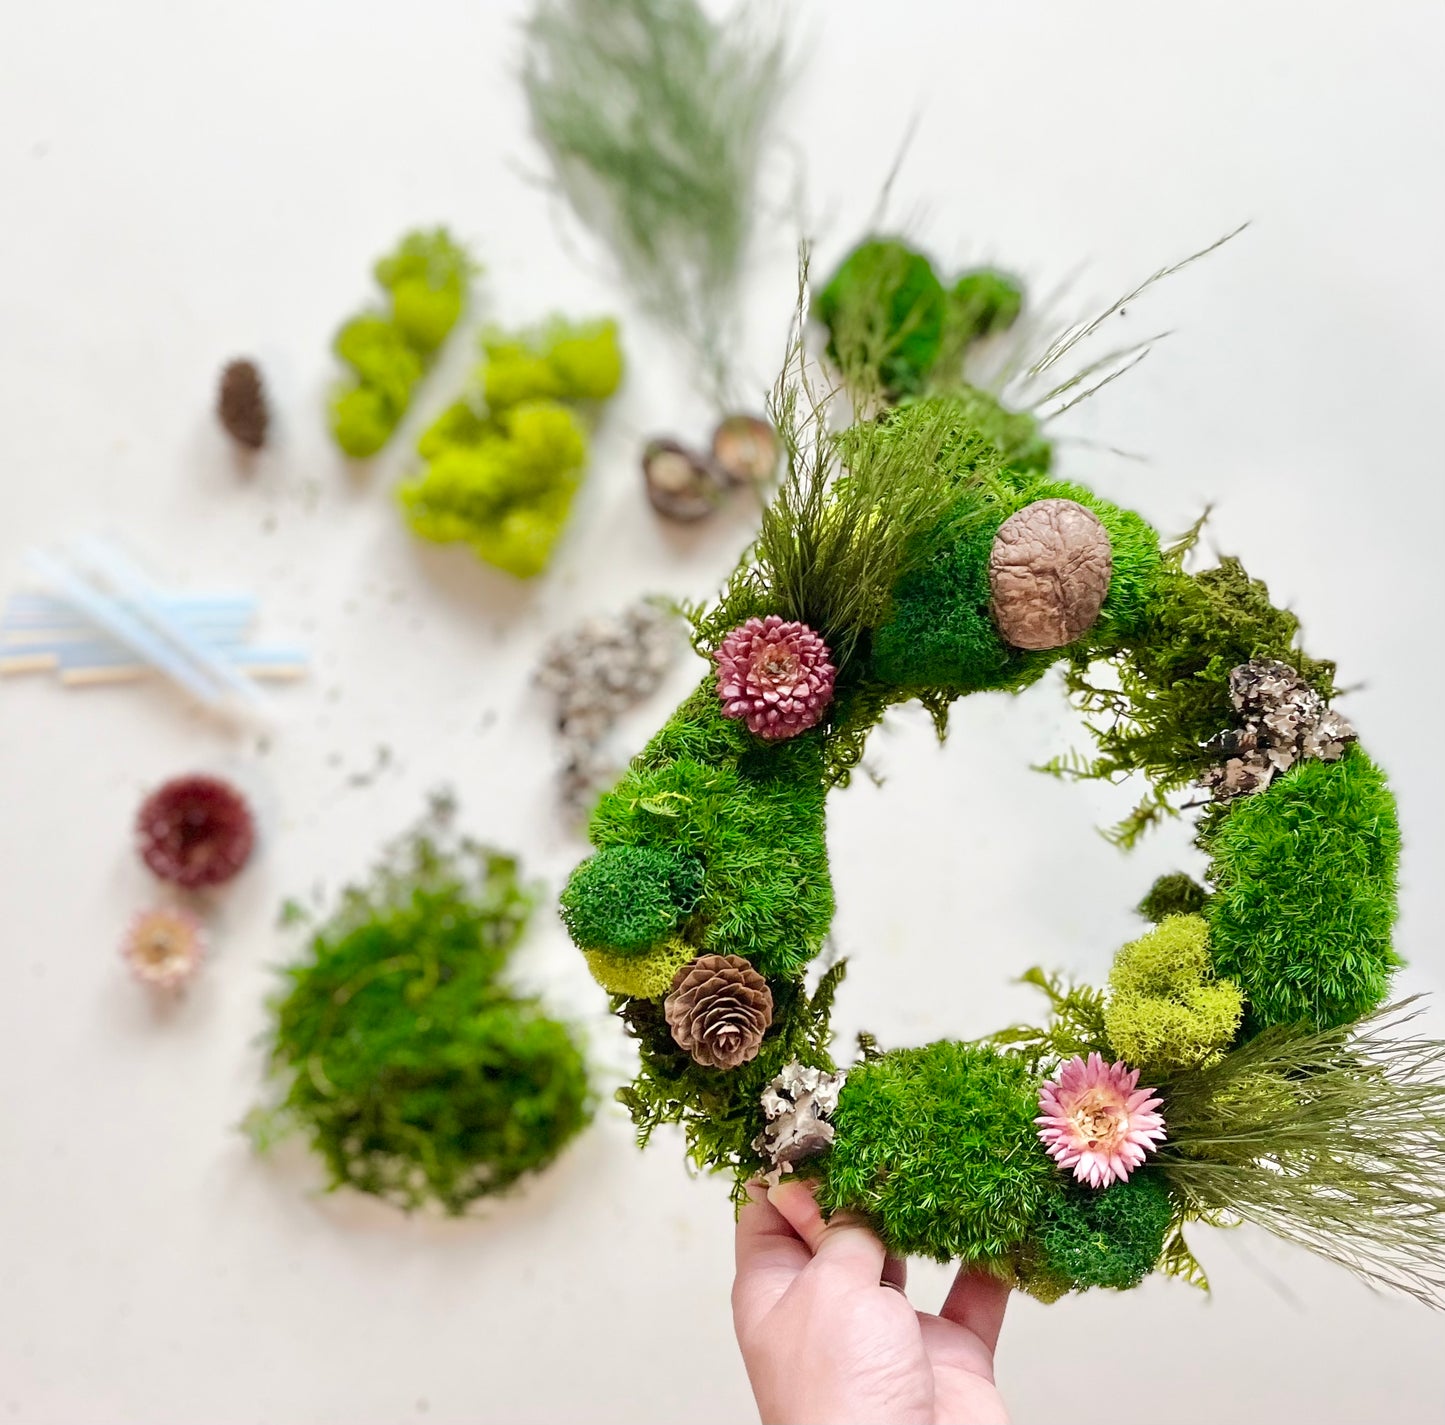 DIY Moss Wall Art Wreath Kit